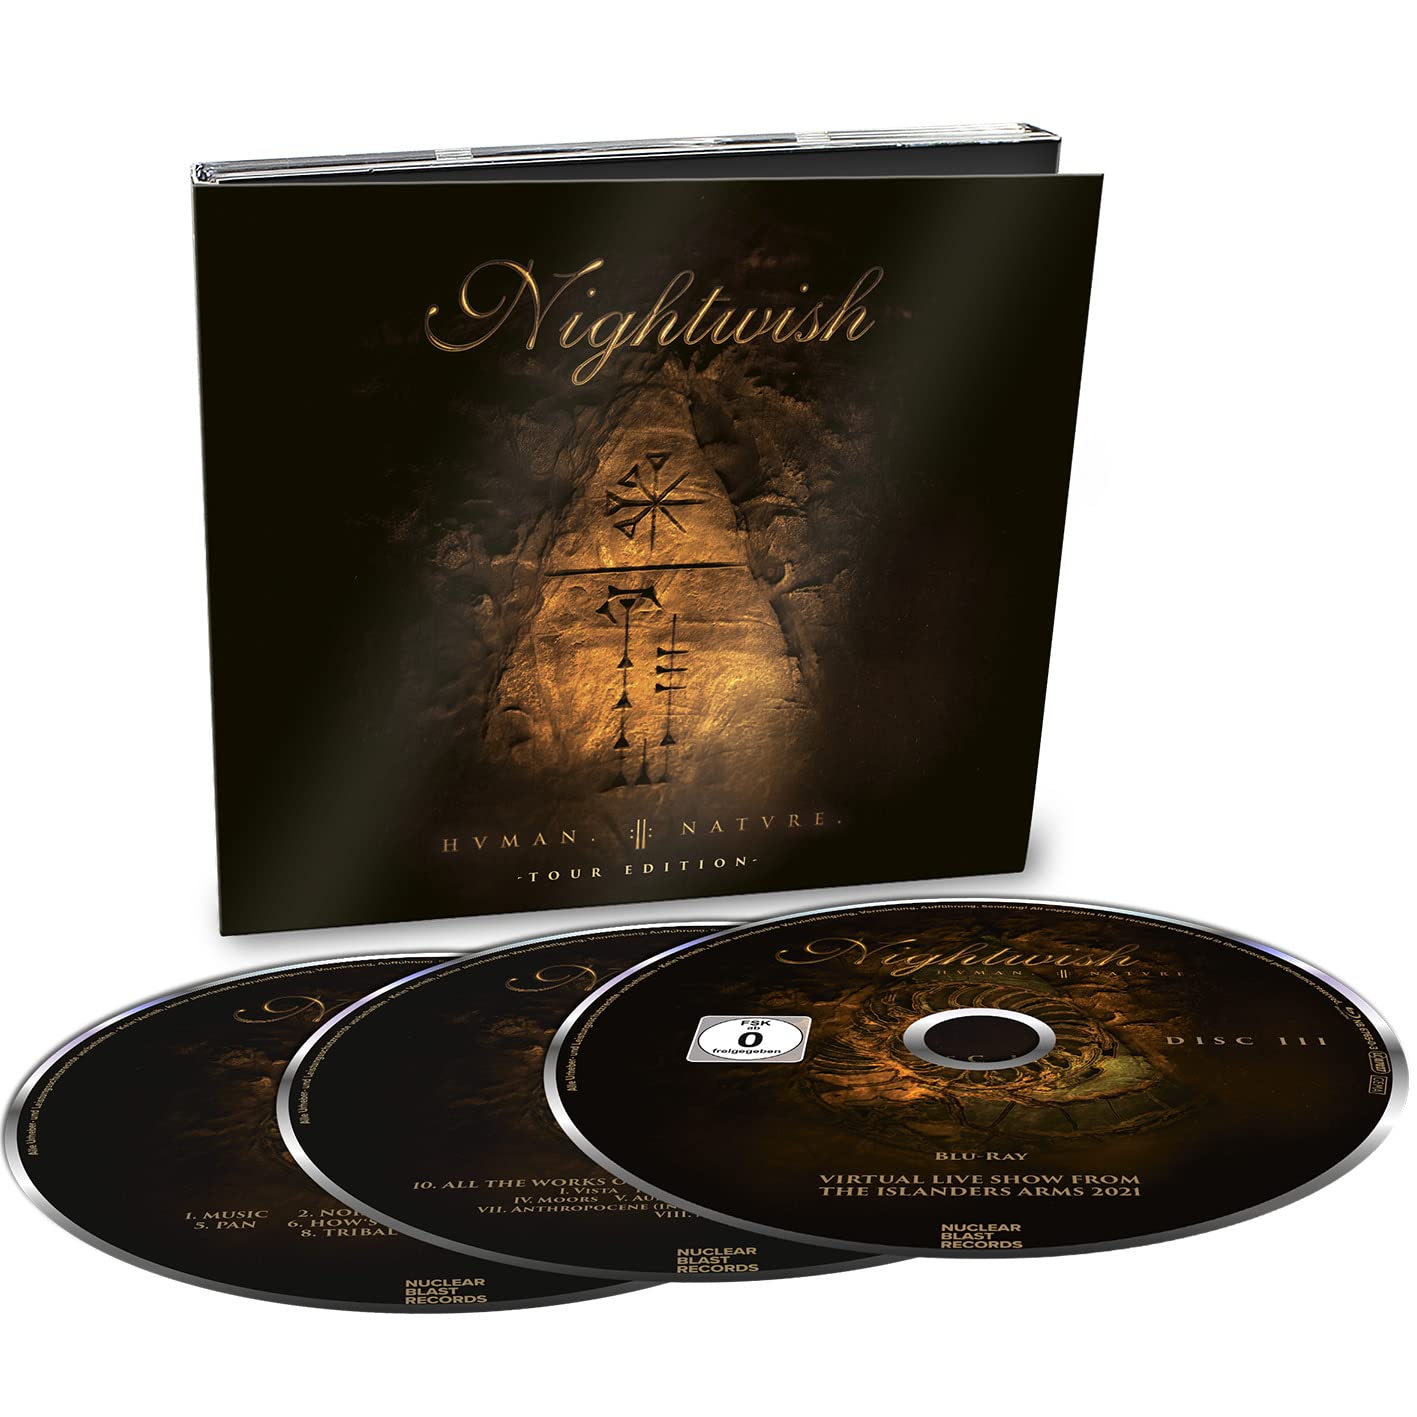 Nightwish Human II Nature Tour Edition 2CD+Blu-Ray [Importado]